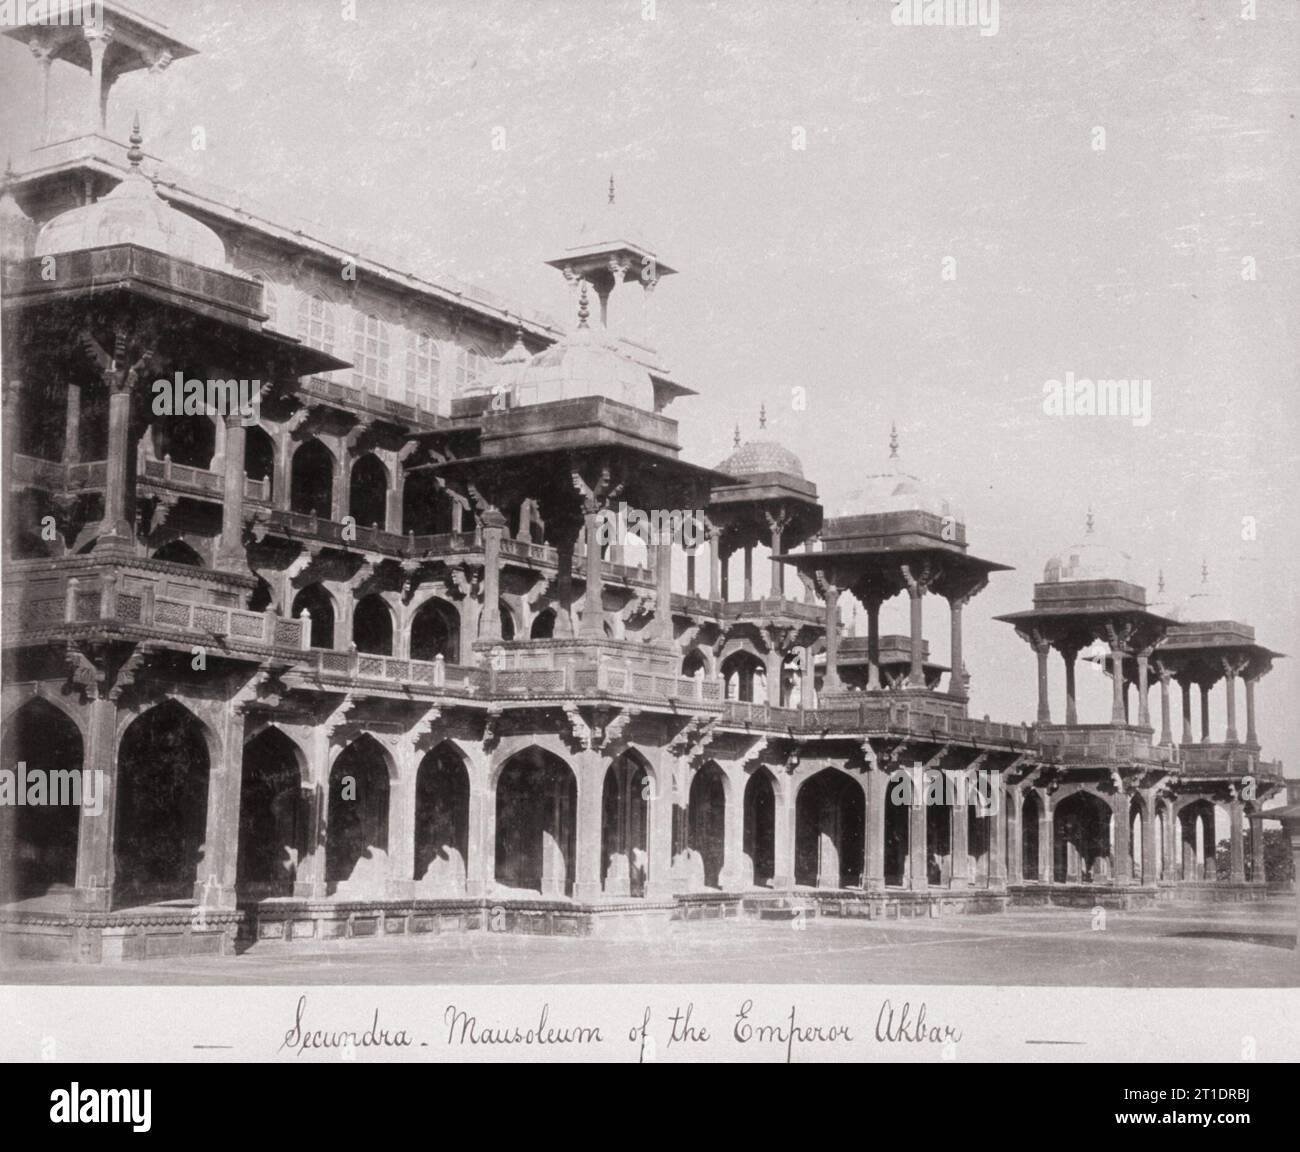 Secundra, Mausoleum of the Emperor Akbar, Late 1860s. Stock Photo